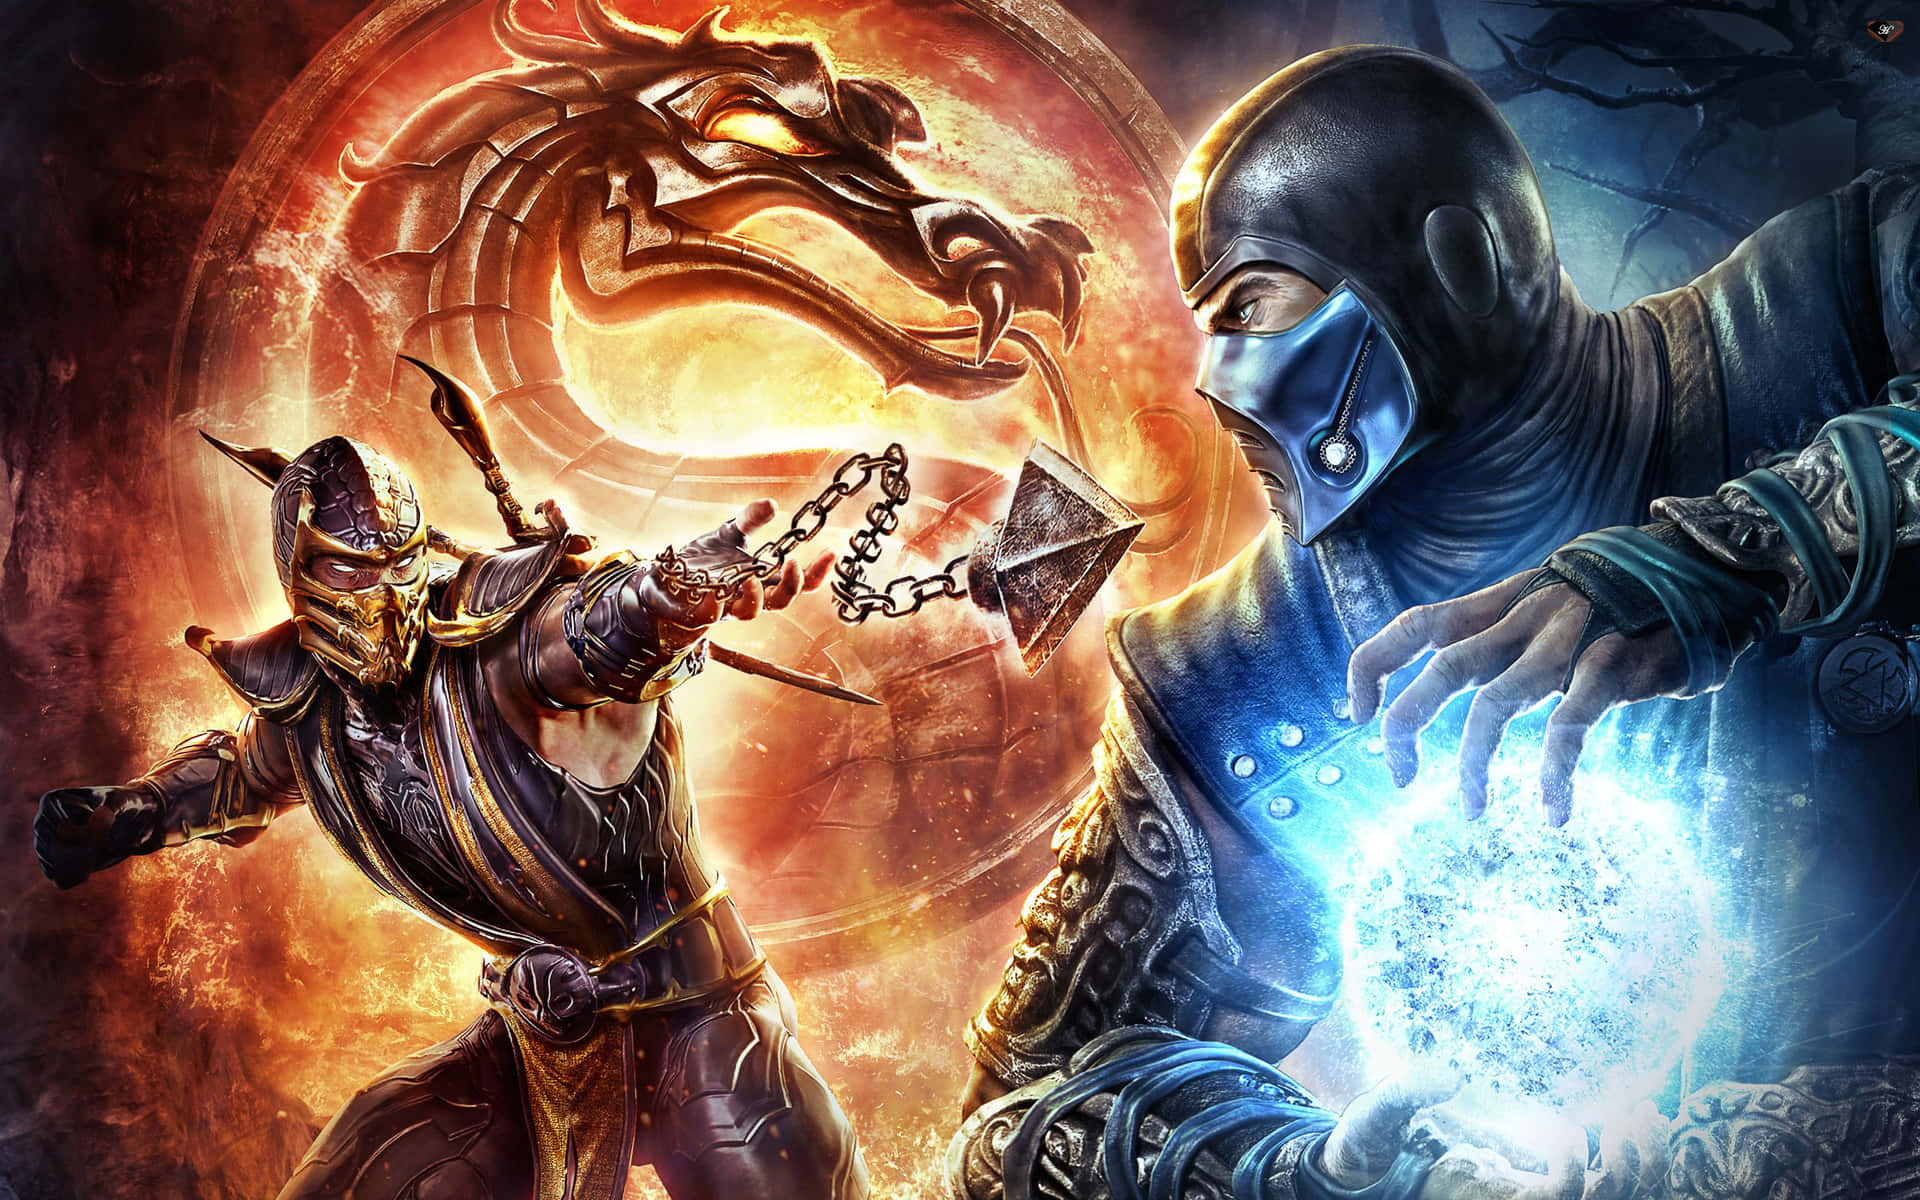 Frosty Warrior - Sub-Zero Unleashes his Power in Mortal Kombat Wallpaper